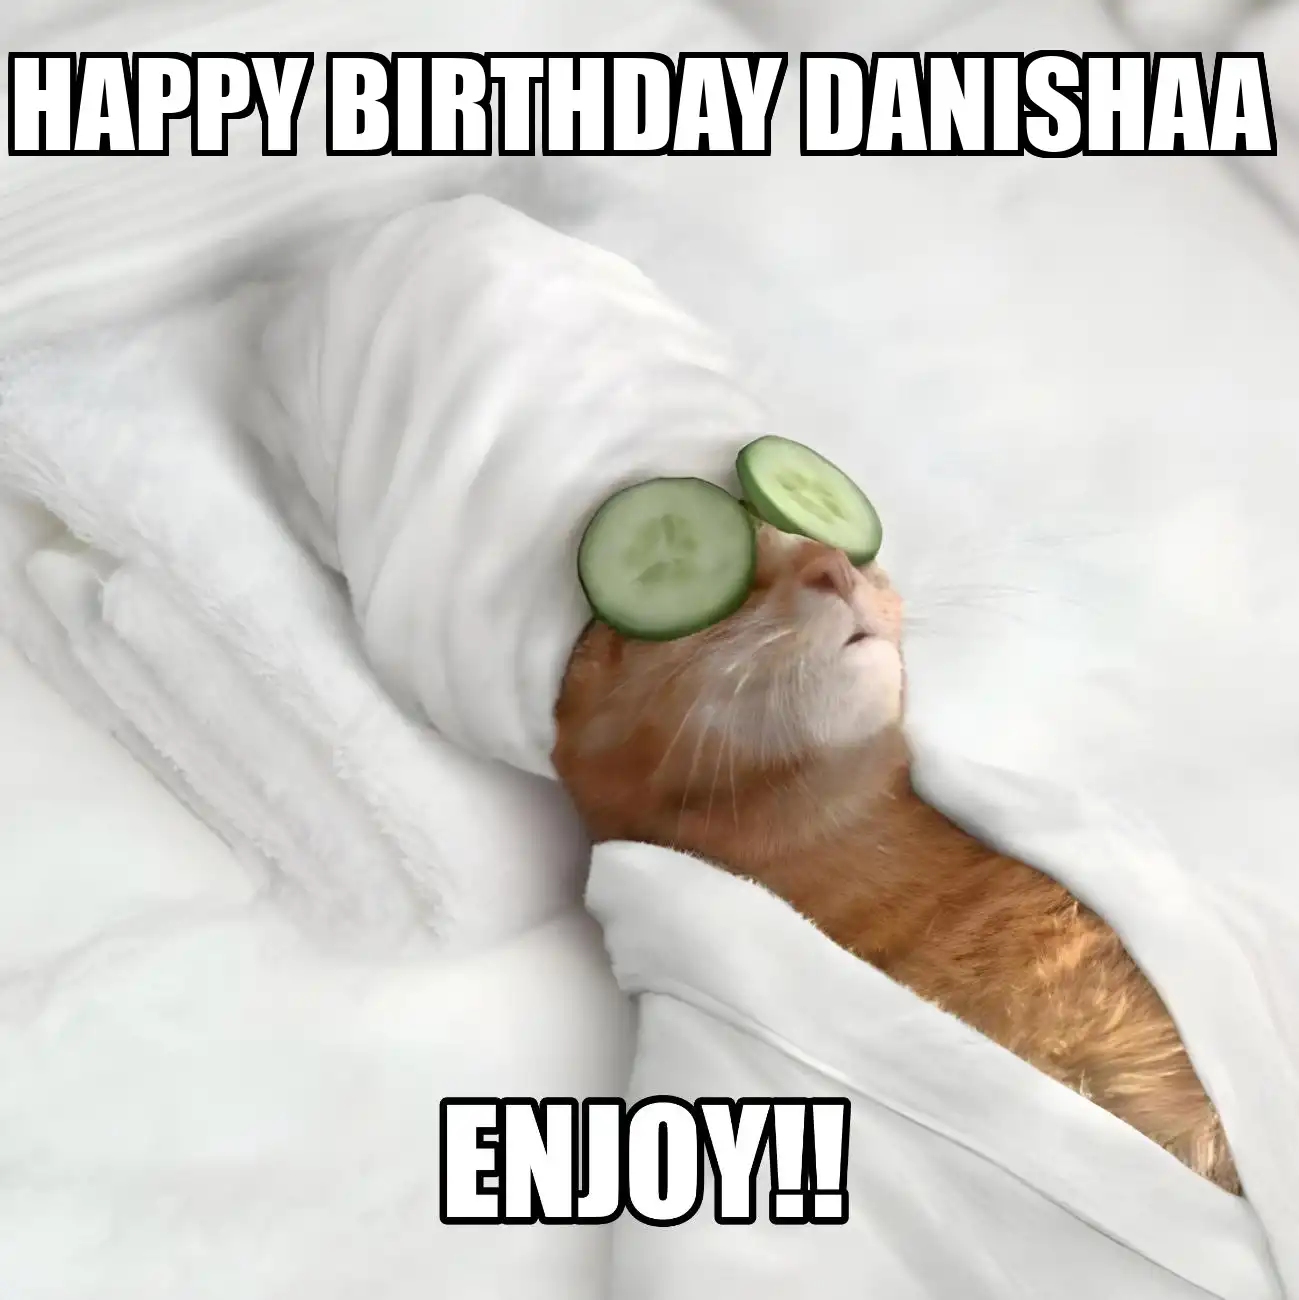 Happy Birthday Danishaa Enjoy Cat Meme